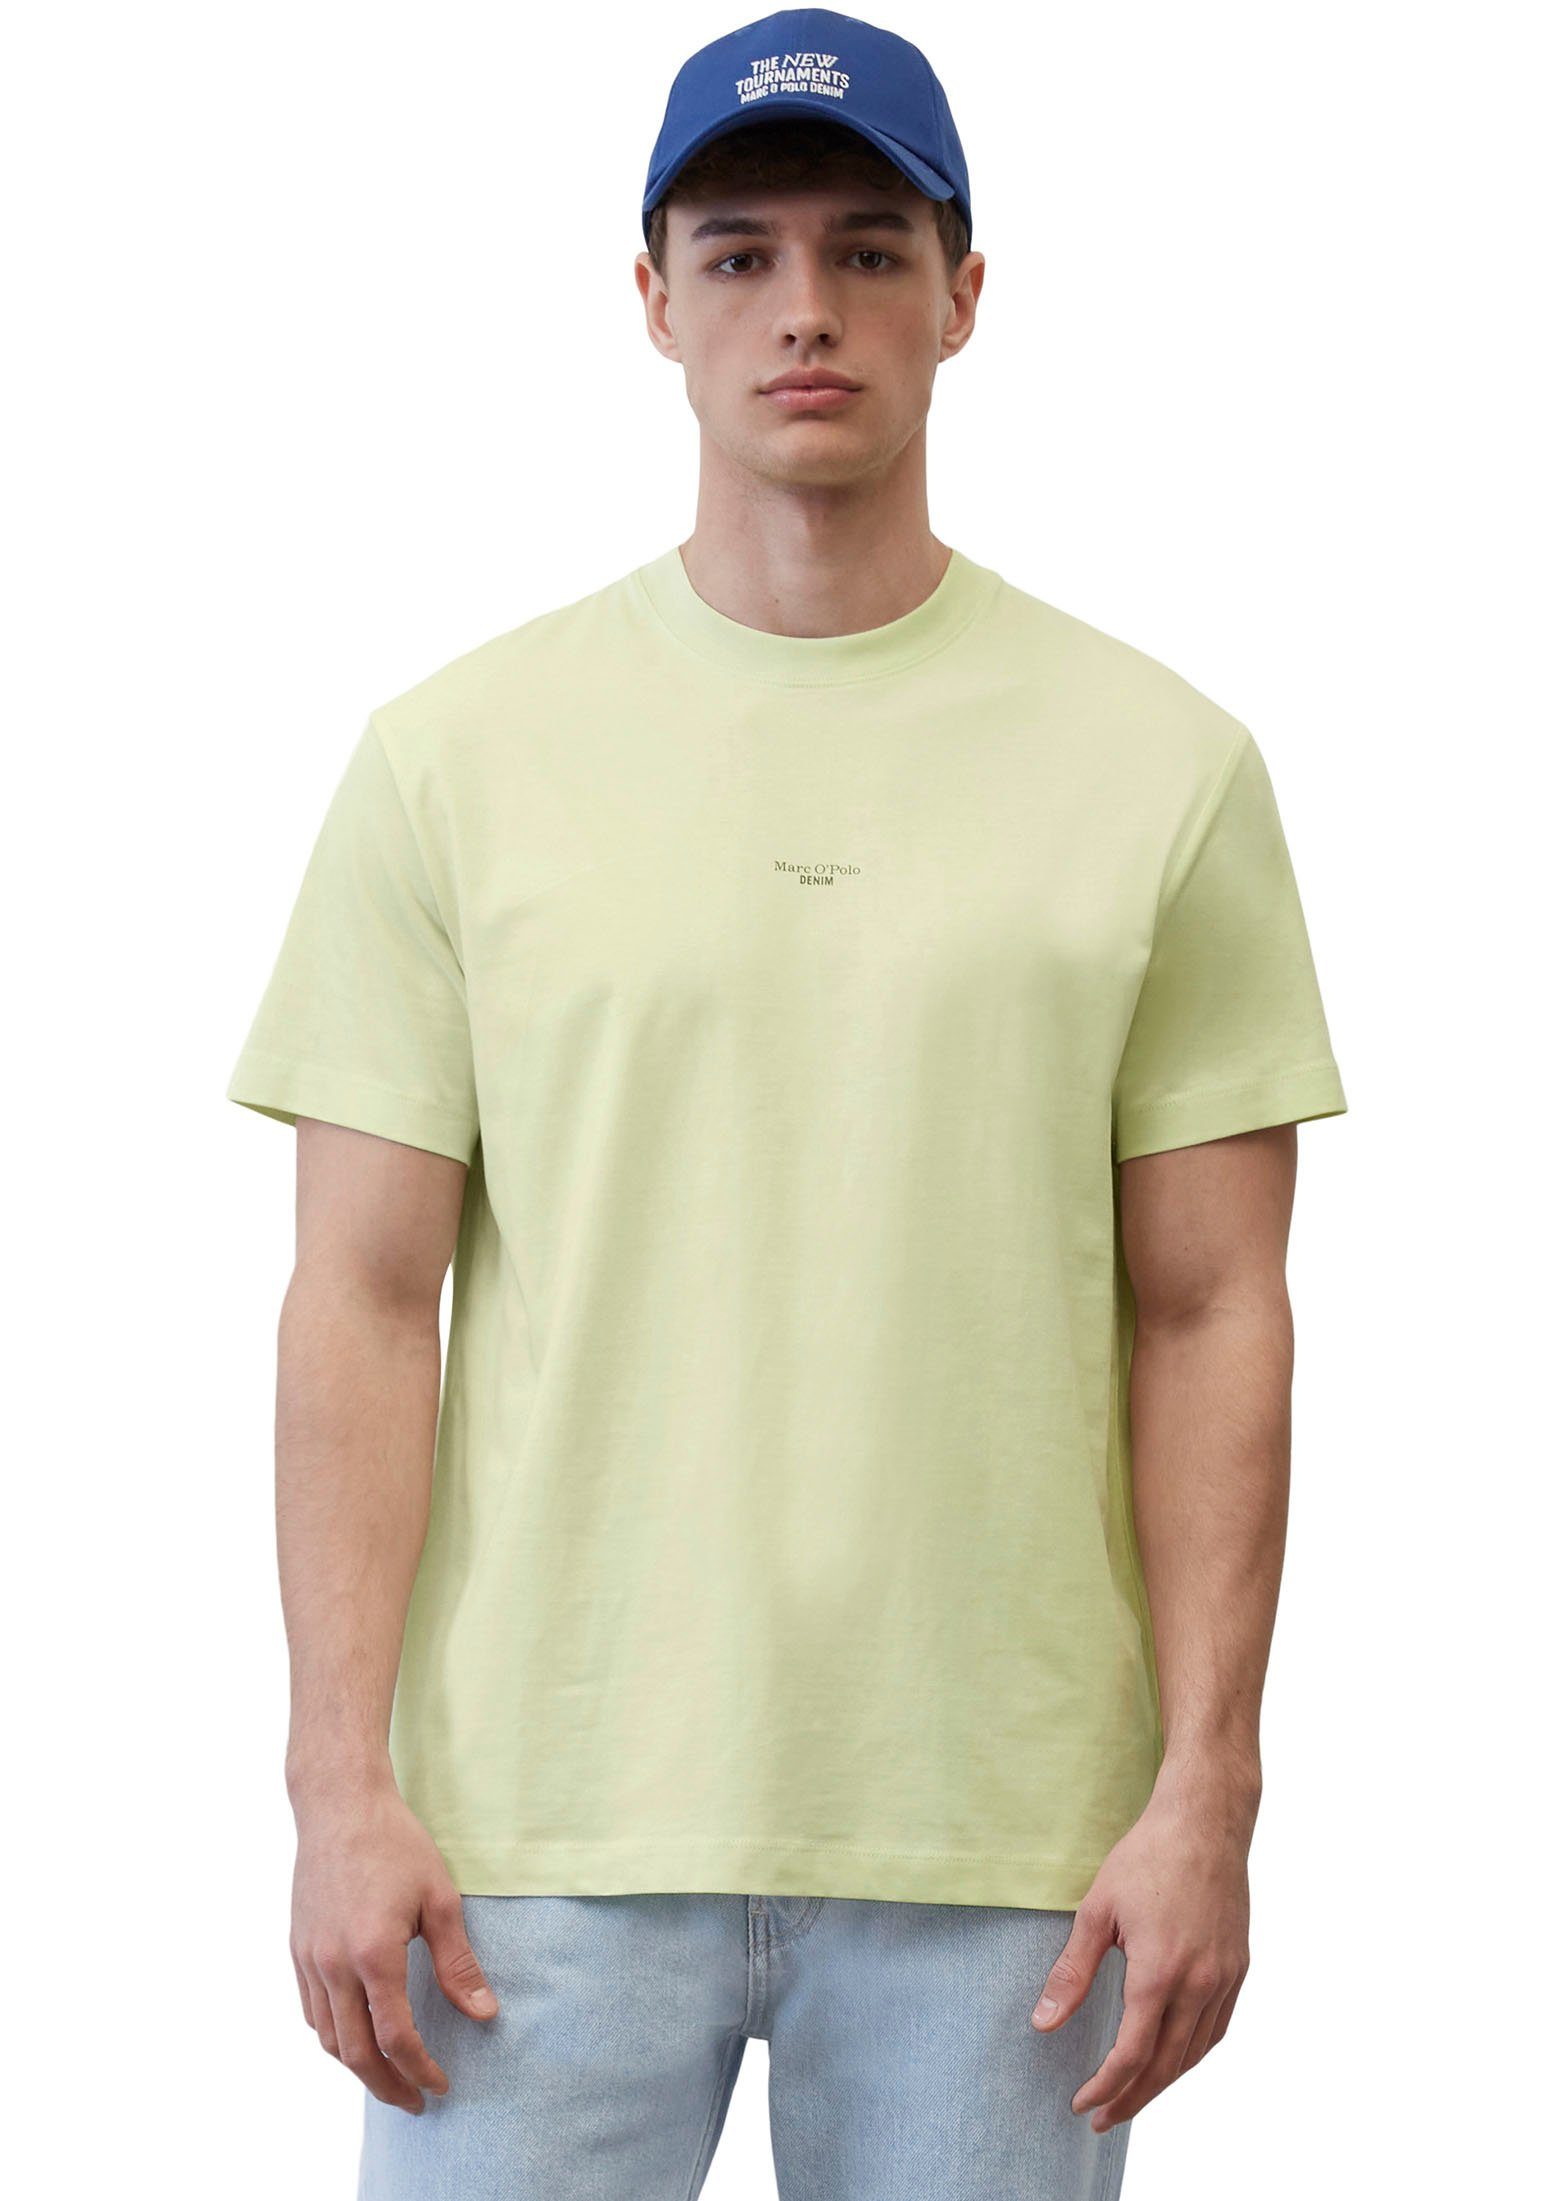 O'Polo T-Shirt Marc DENIM Logo-Druck lime kleinem mit